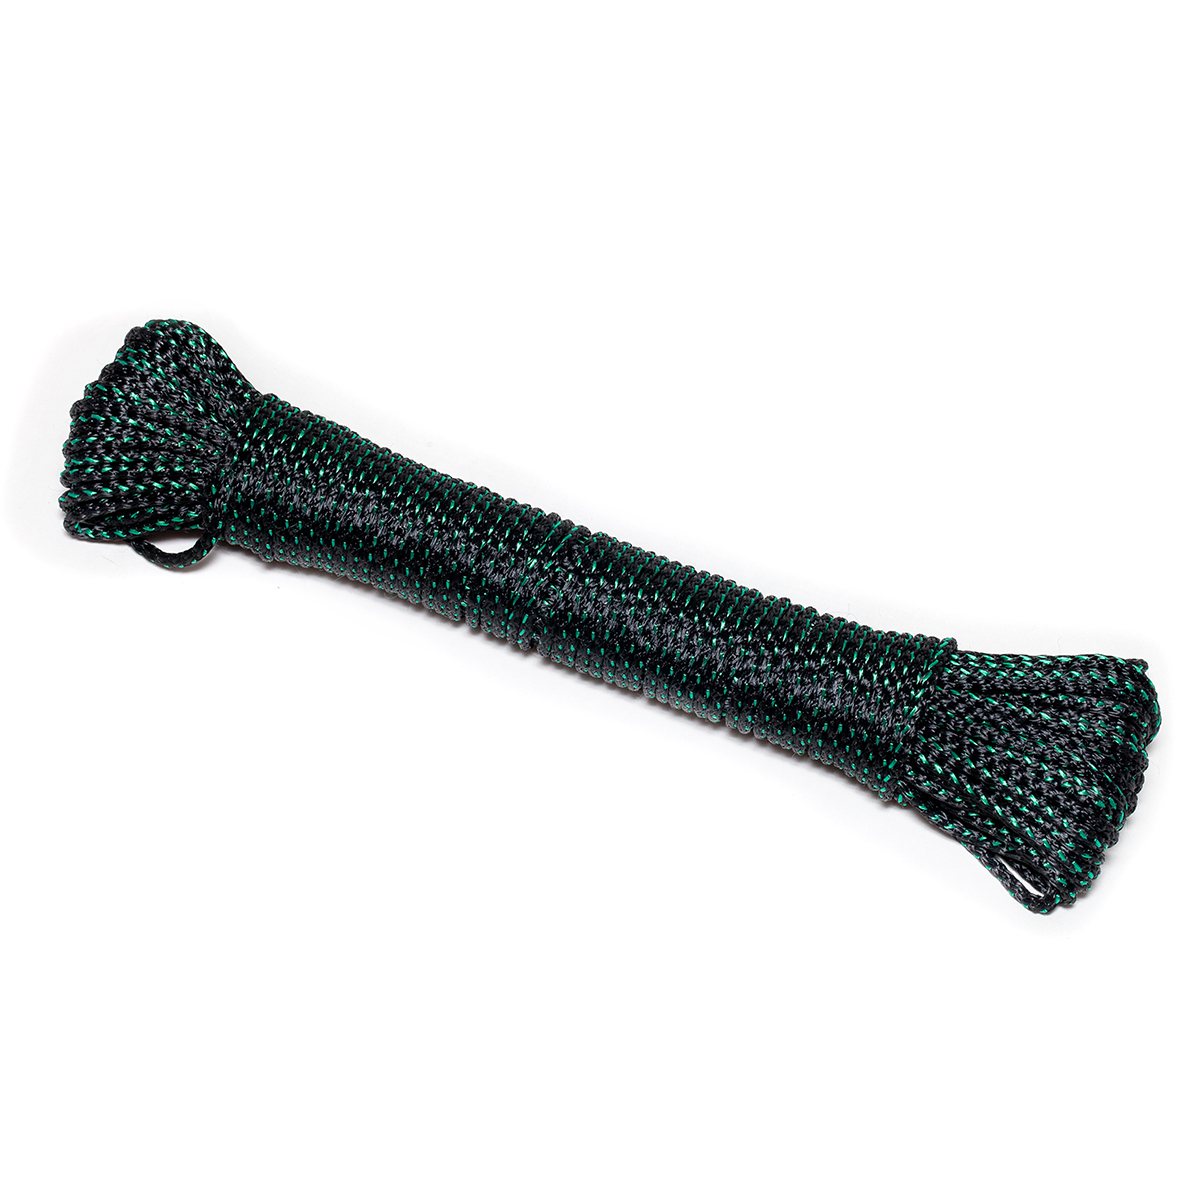 Шнур утяжеляющий Петроканат, 31 м, черно-зеленый, вес 14 г/м шнур для вязания 100% полиэфир 1мм 200м 75±10гр 09 кофе